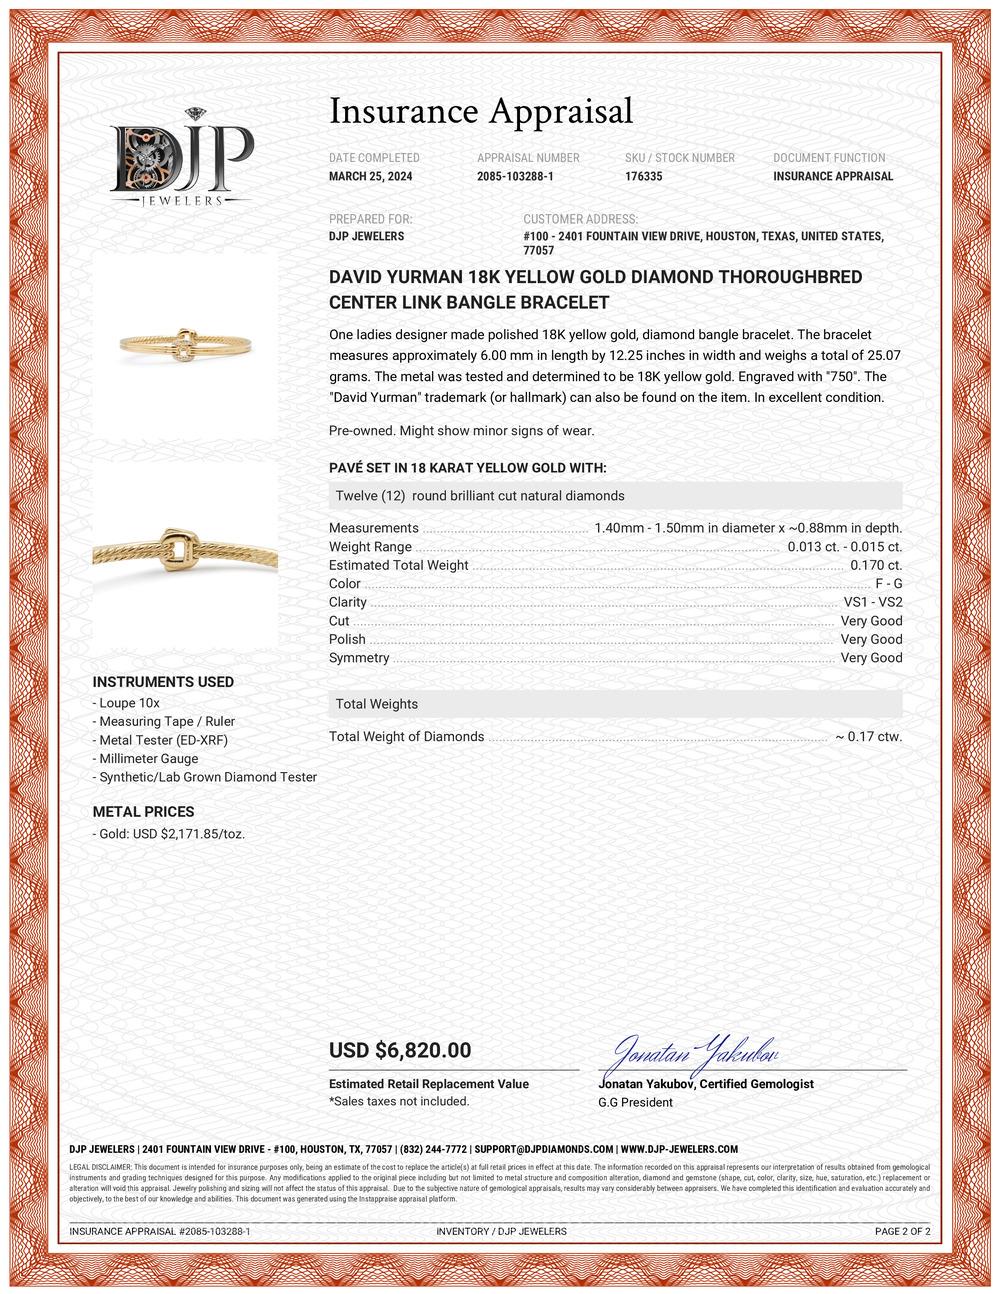 David Yurman 18K Yellow Gold Diamond Thoroughbred Center Link Bangle Bracelet 3